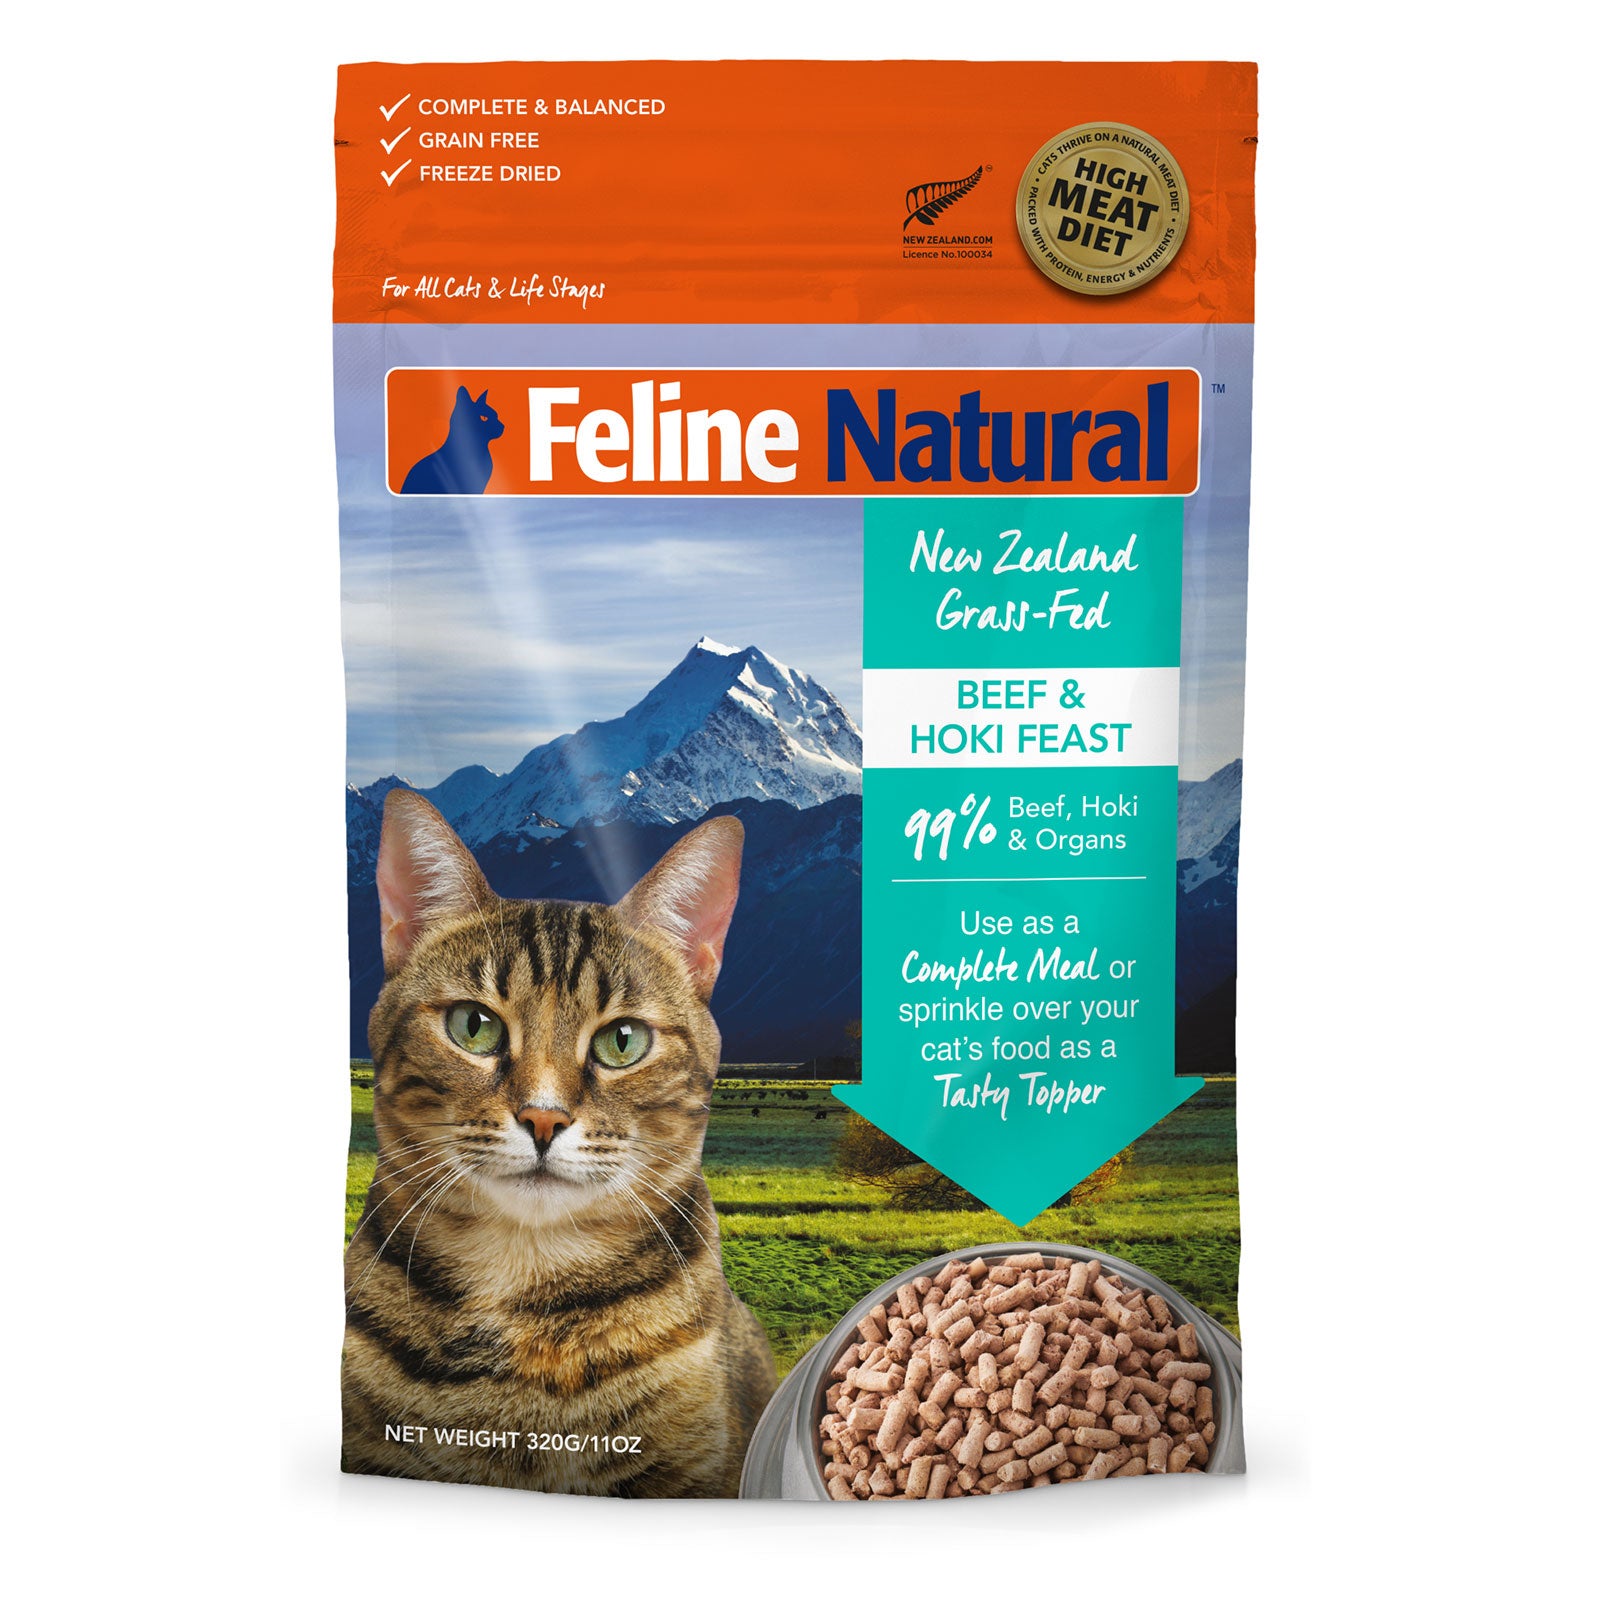 Feline Natural Cat Food Beef & Hoki